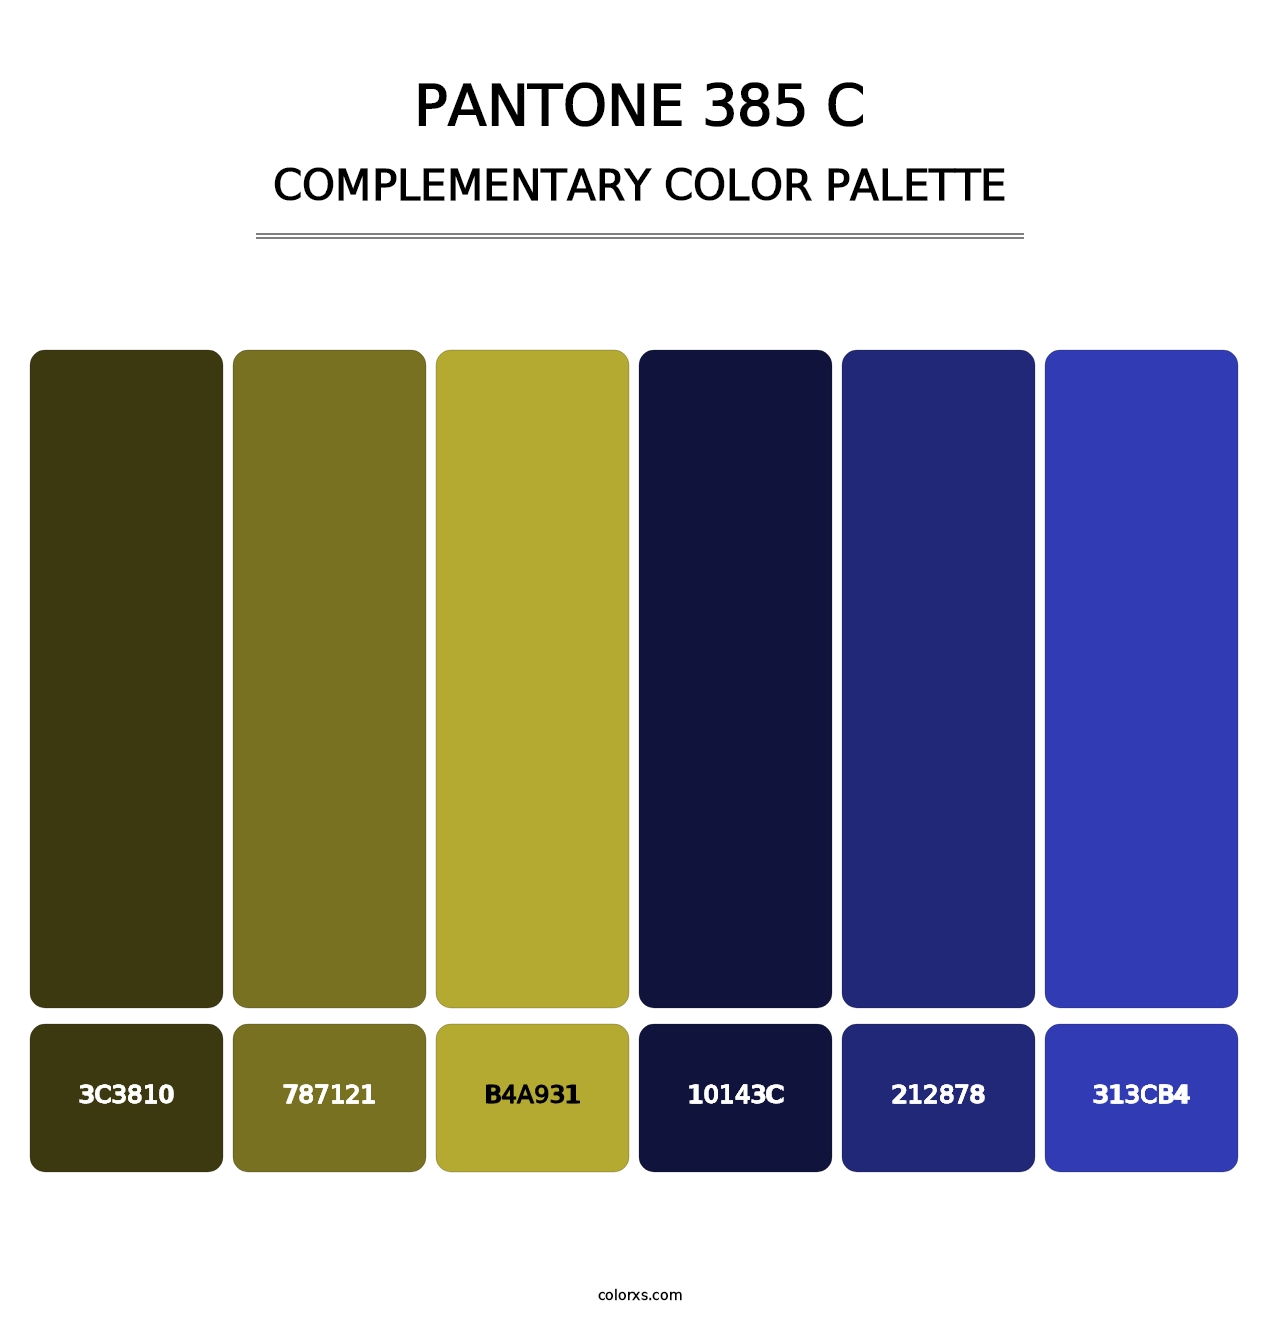 PANTONE 385 C - Complementary Color Palette